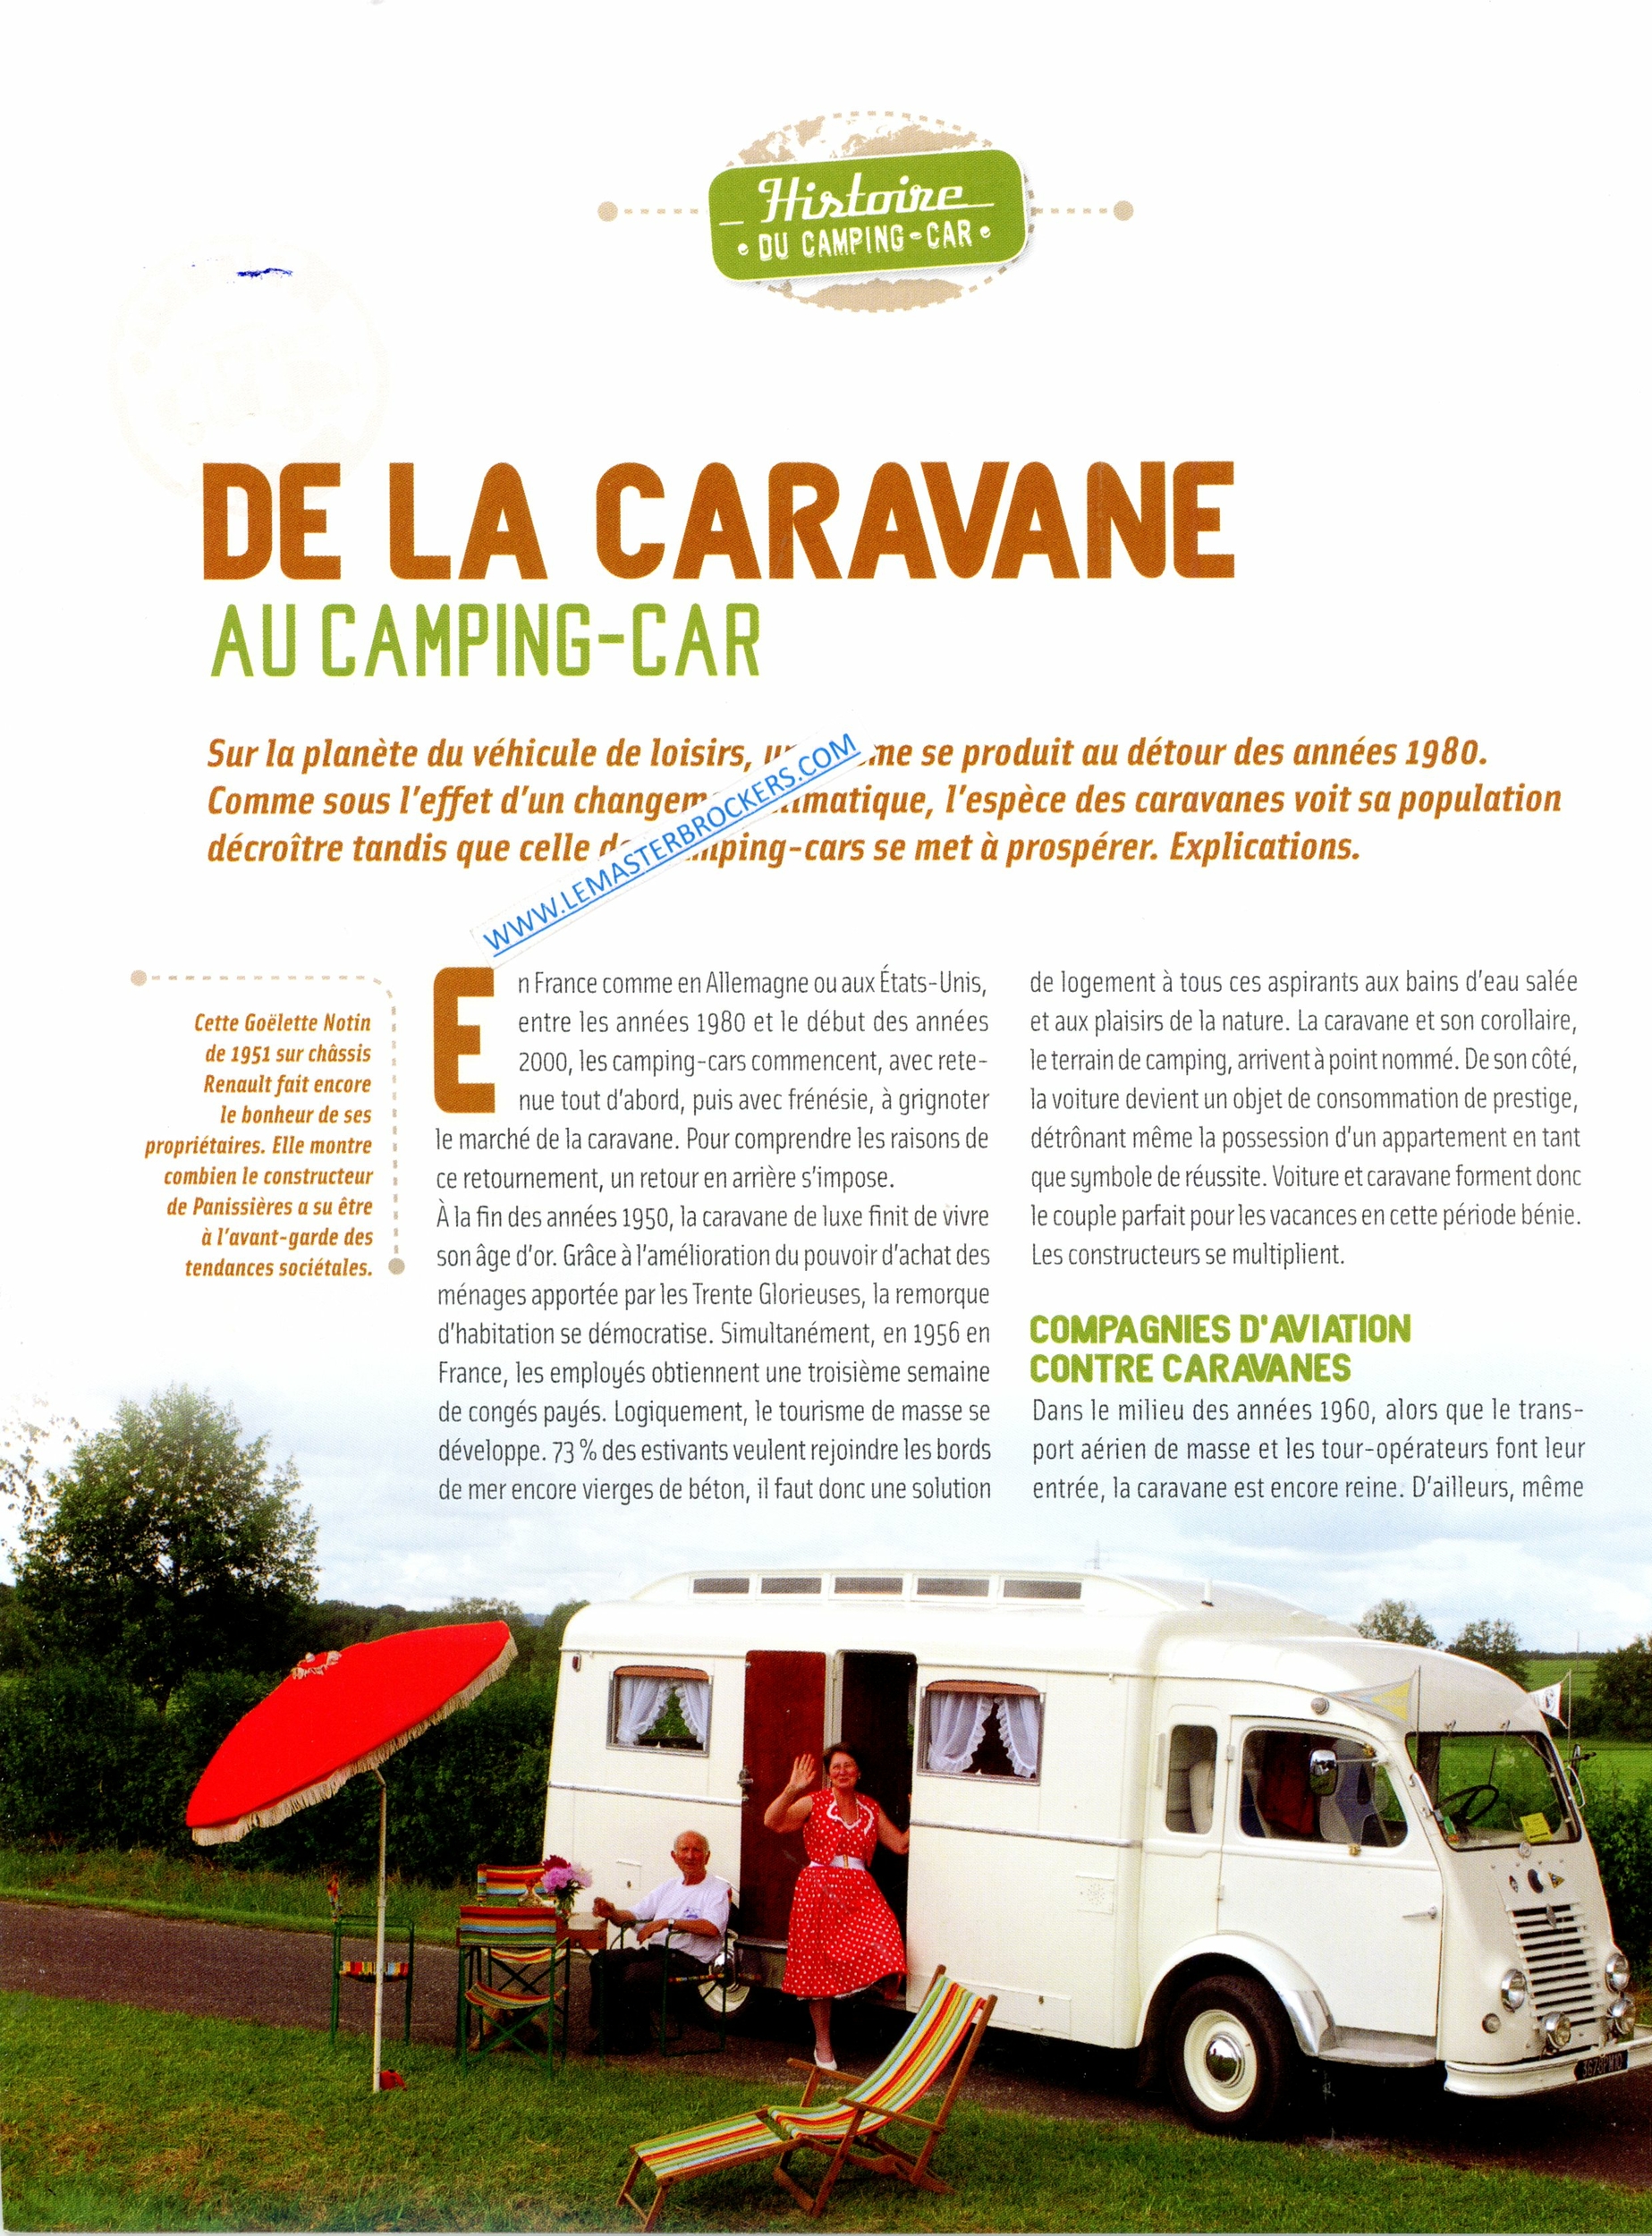 DE LA CARAVANE AU CAMPING-CAR